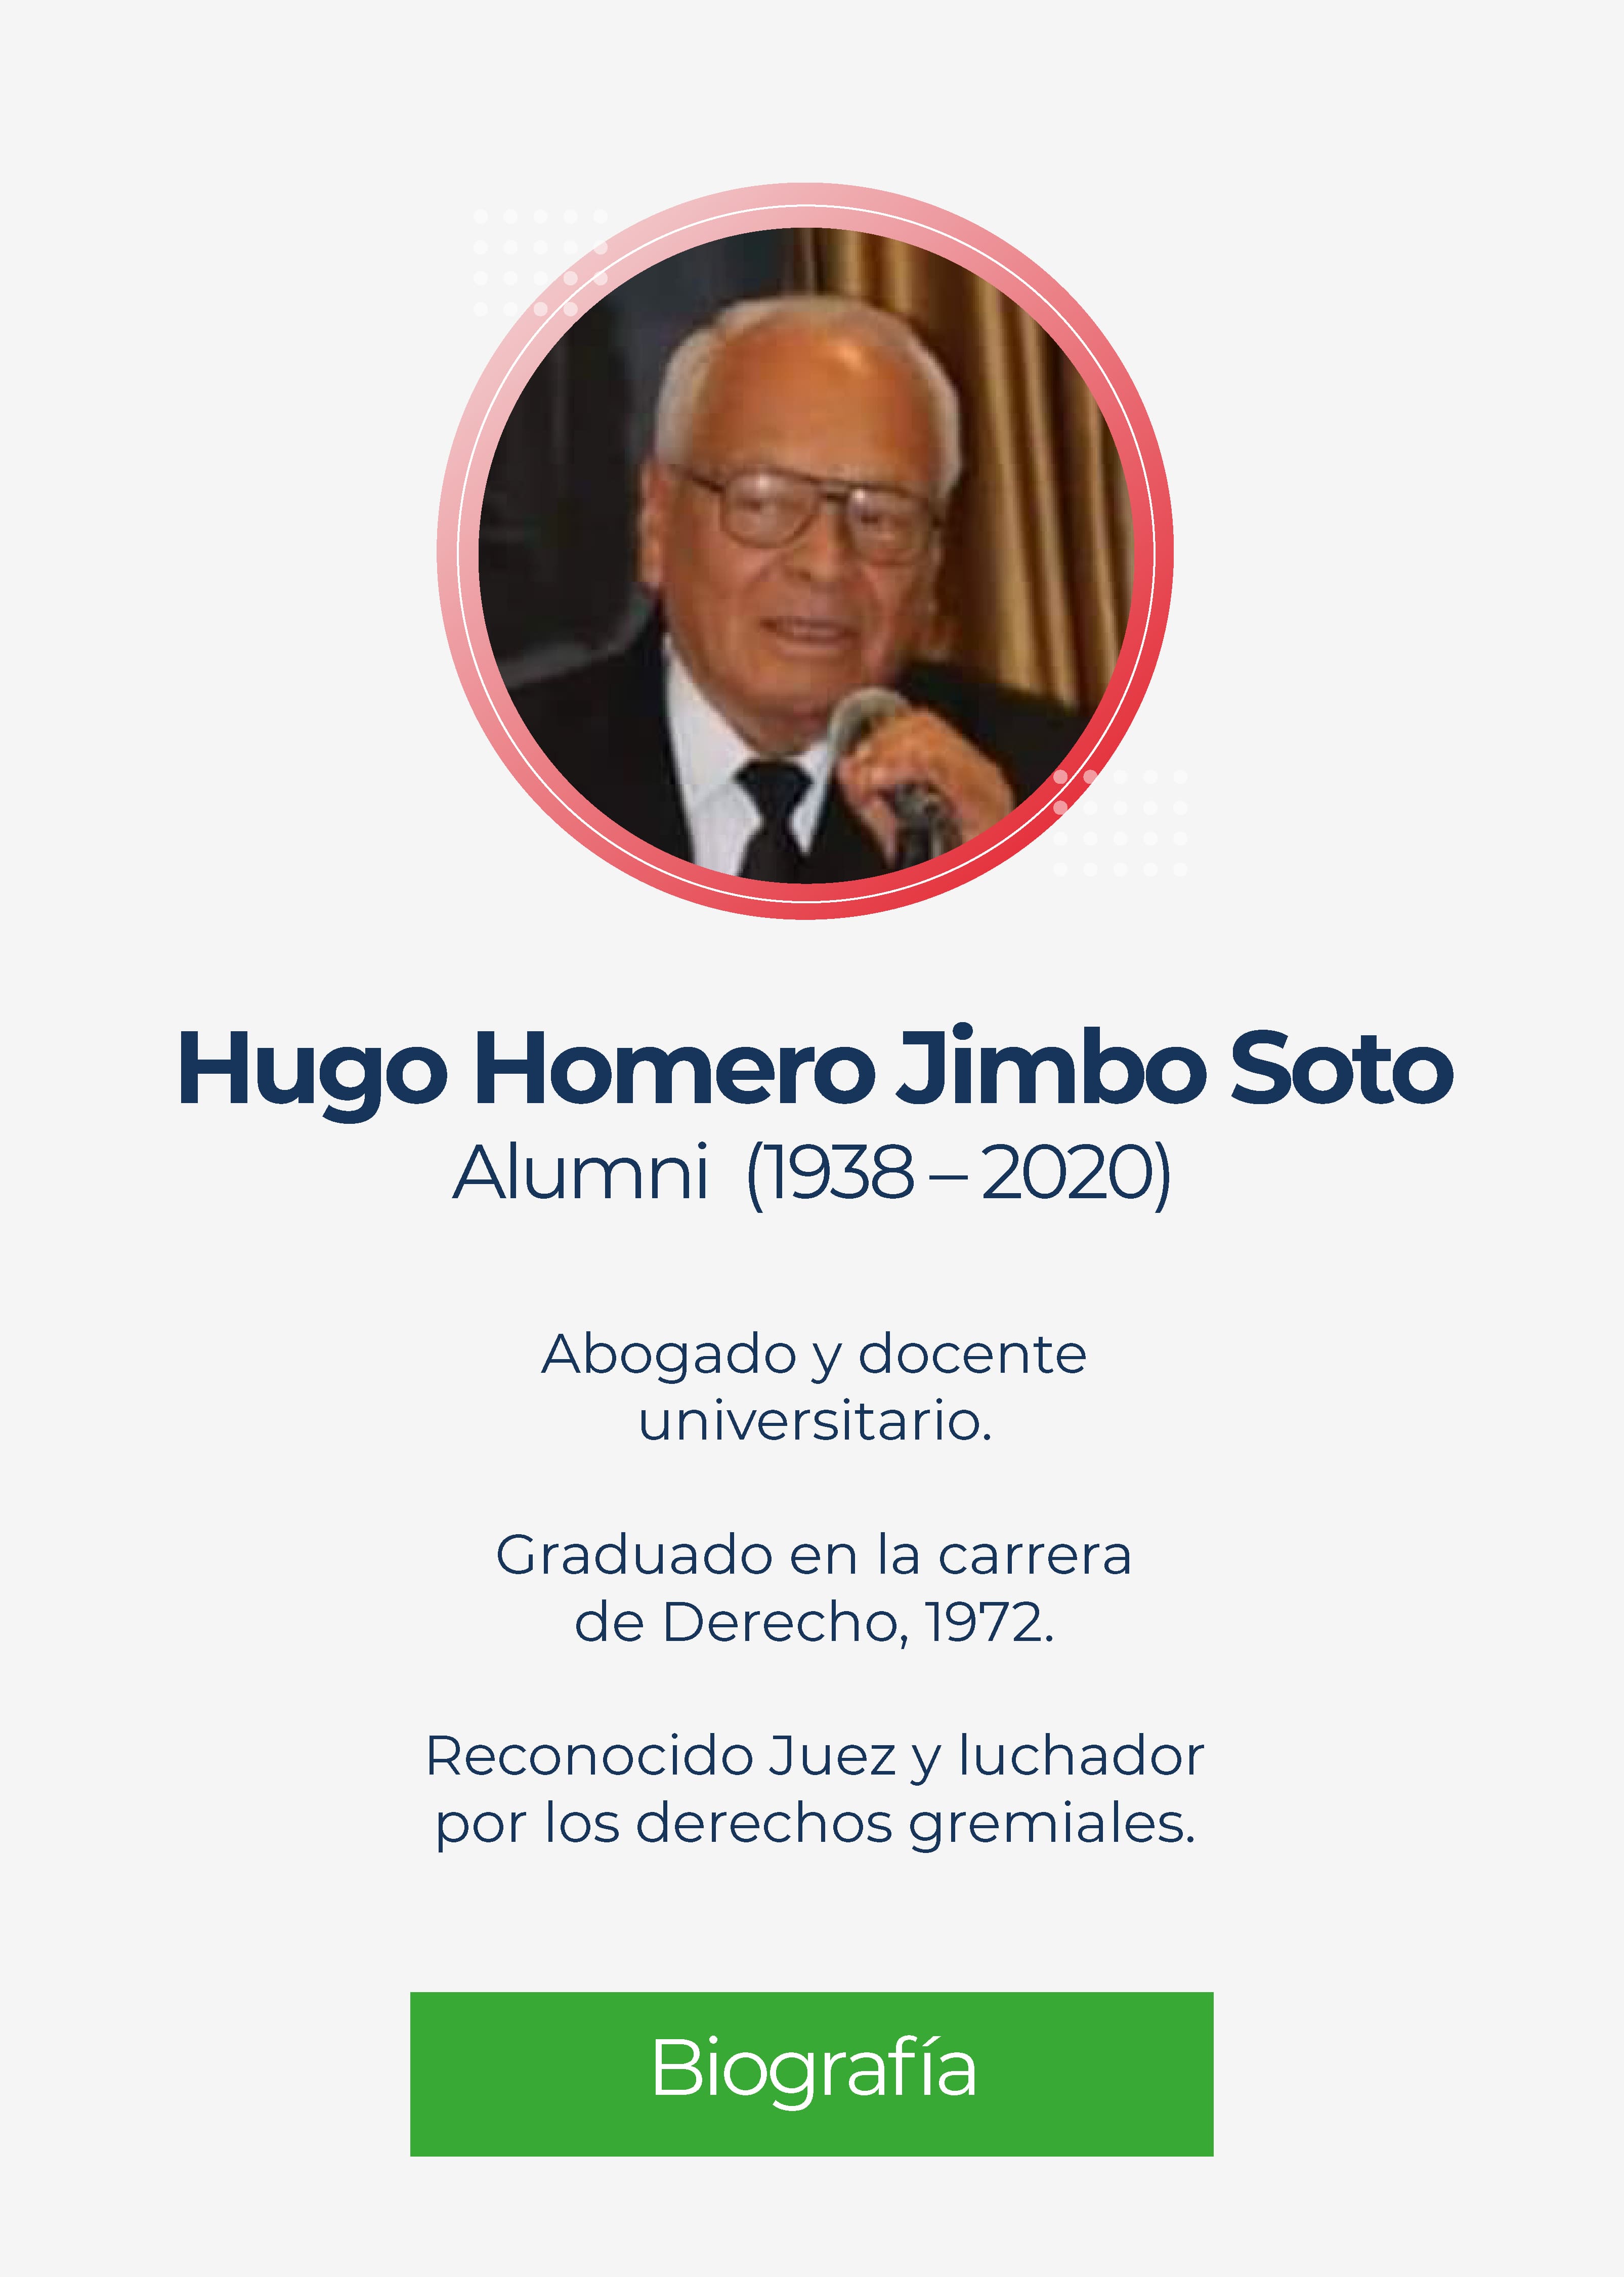 Hugo Homero Jimbo Soto